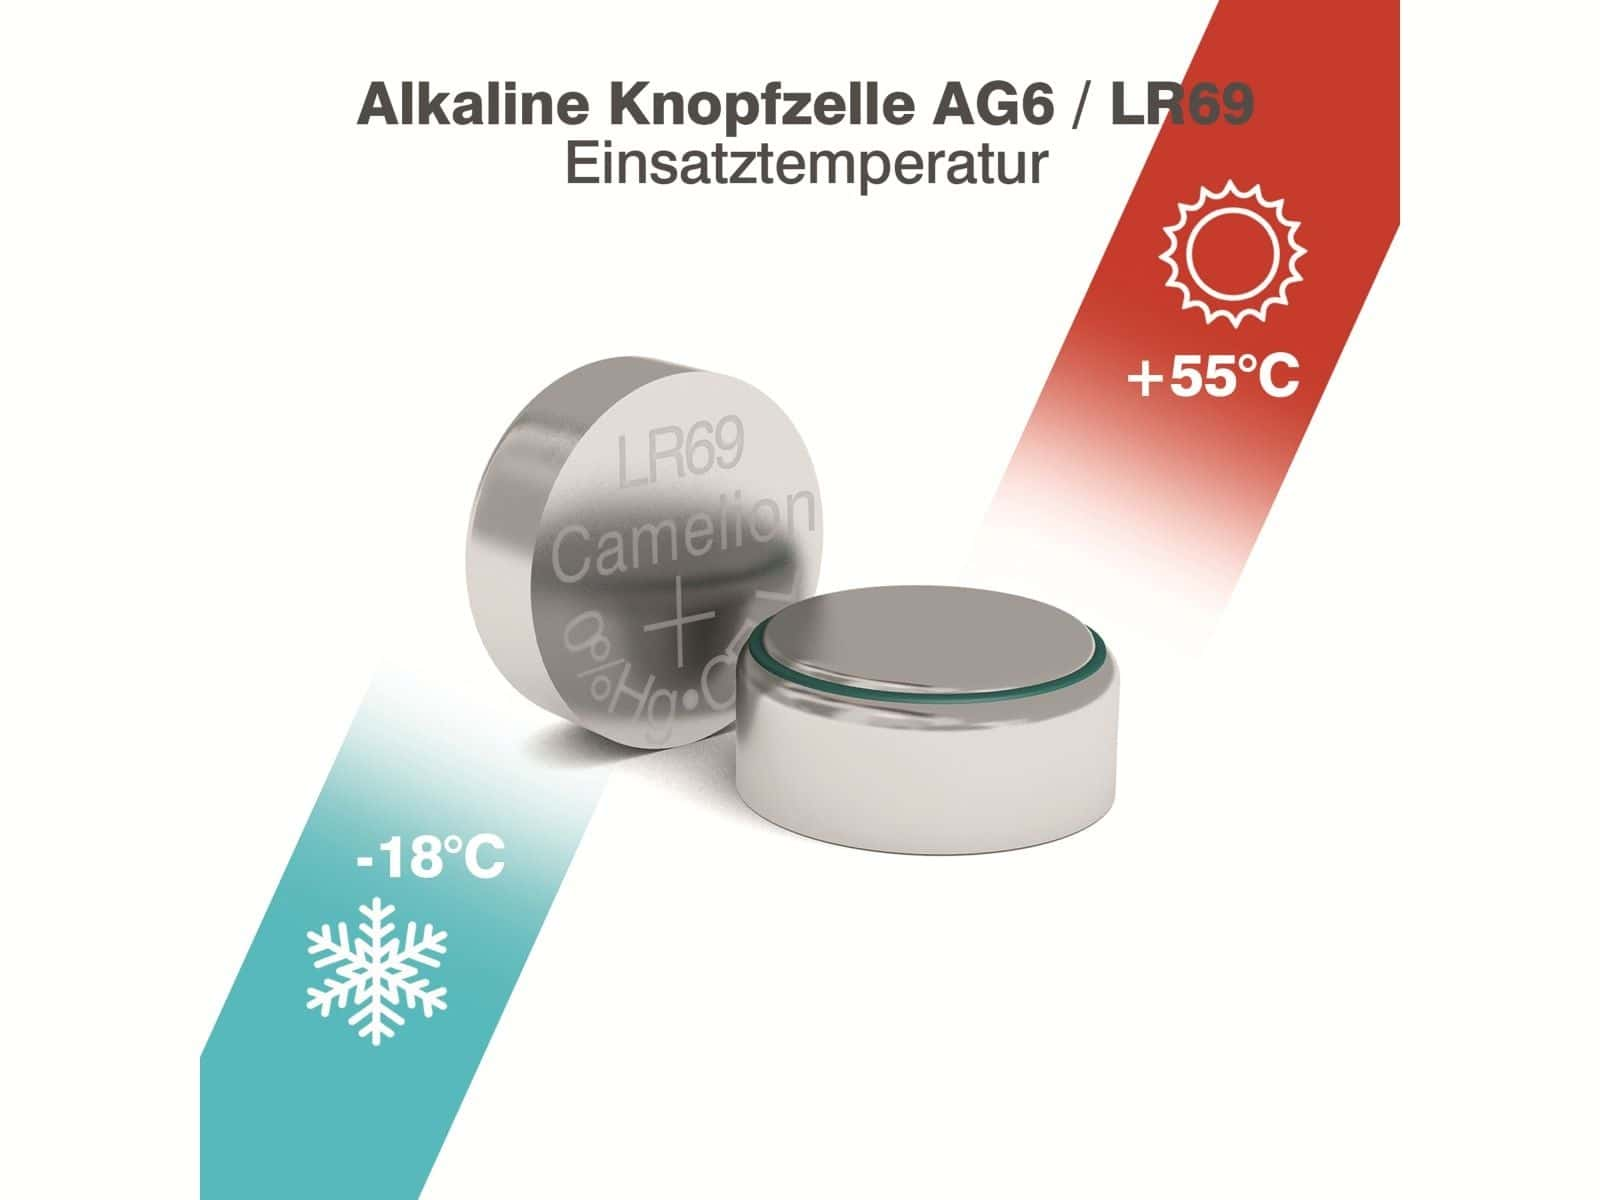 Knopfzelle Alkaline CAMELION Knopfzelle AG6, 10 St.